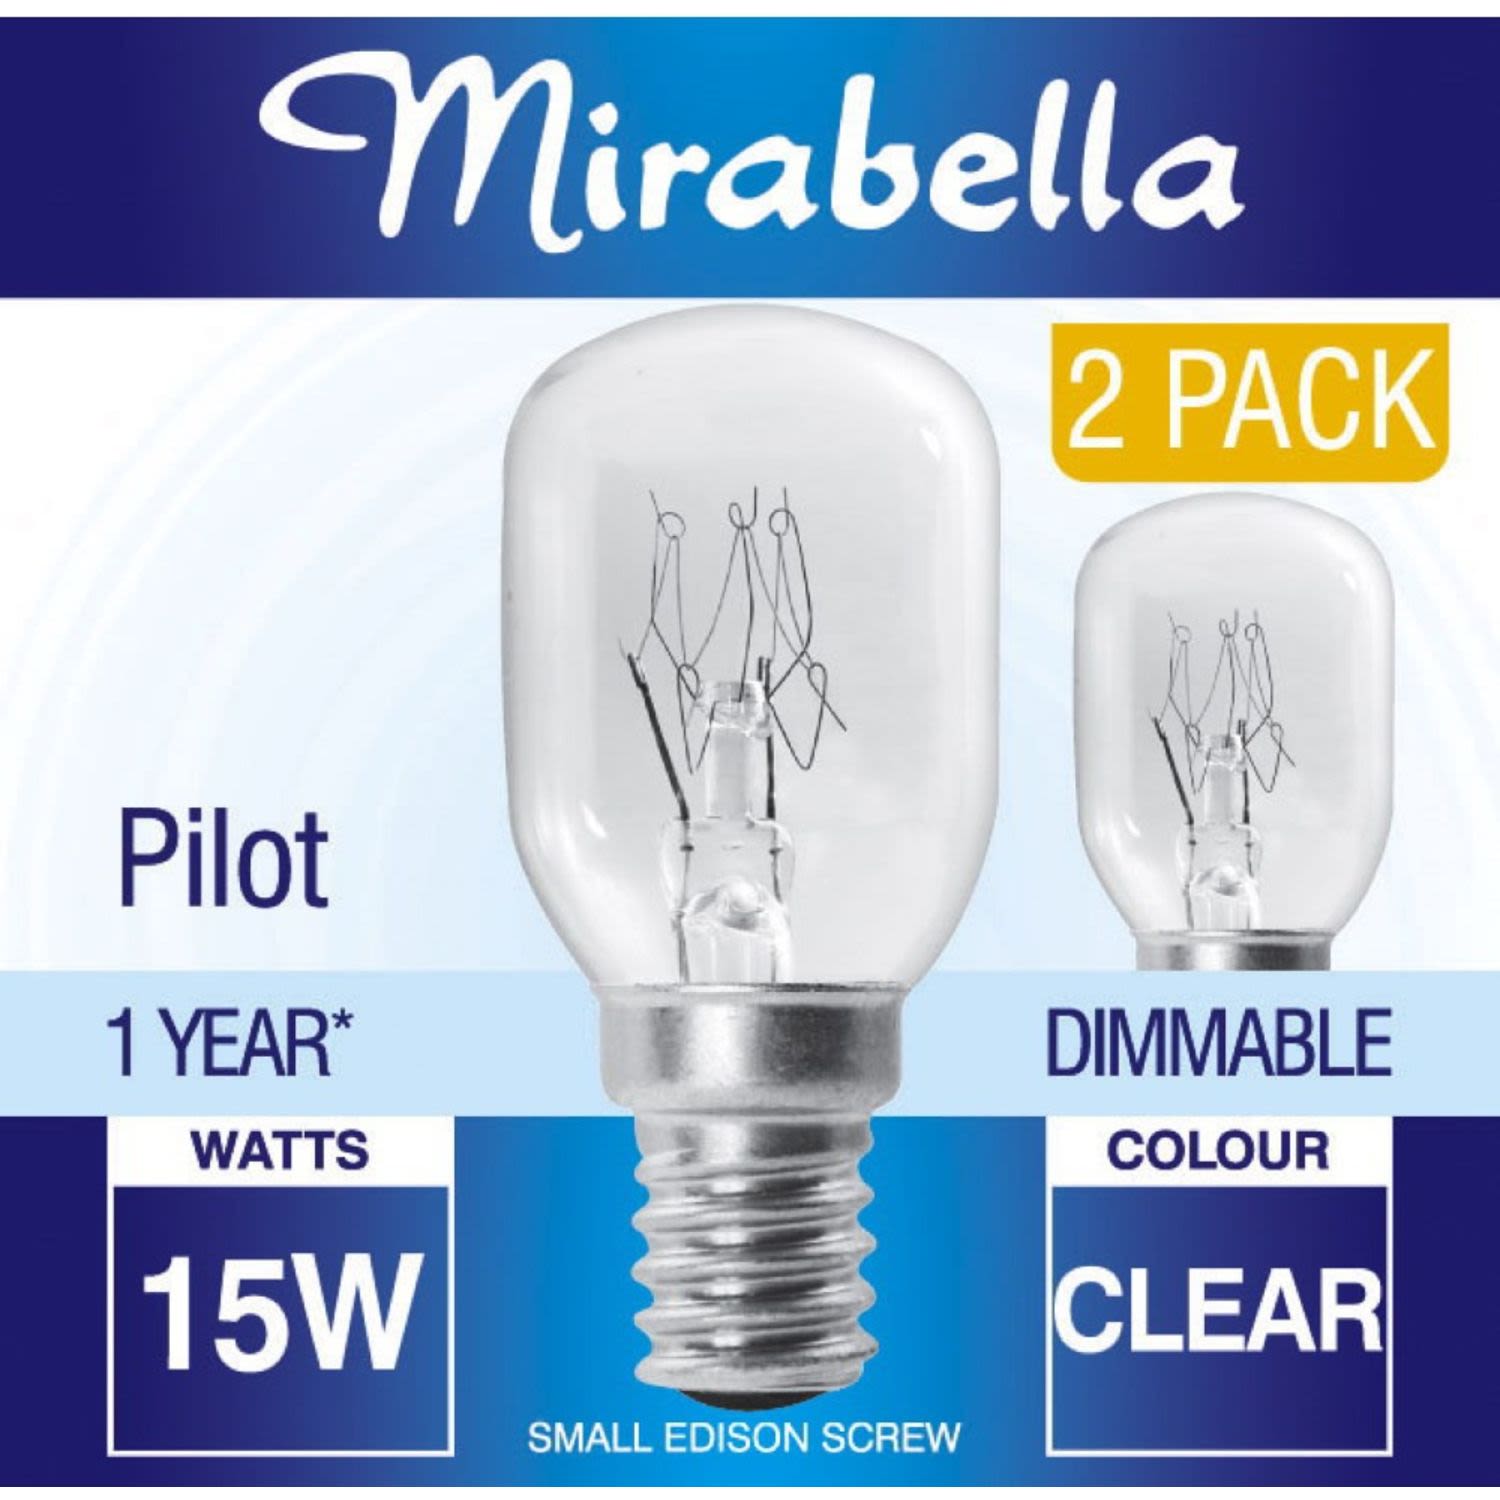 Mirabella E14 15W Pilot Dimmable Clear Bulbs, 2 Each